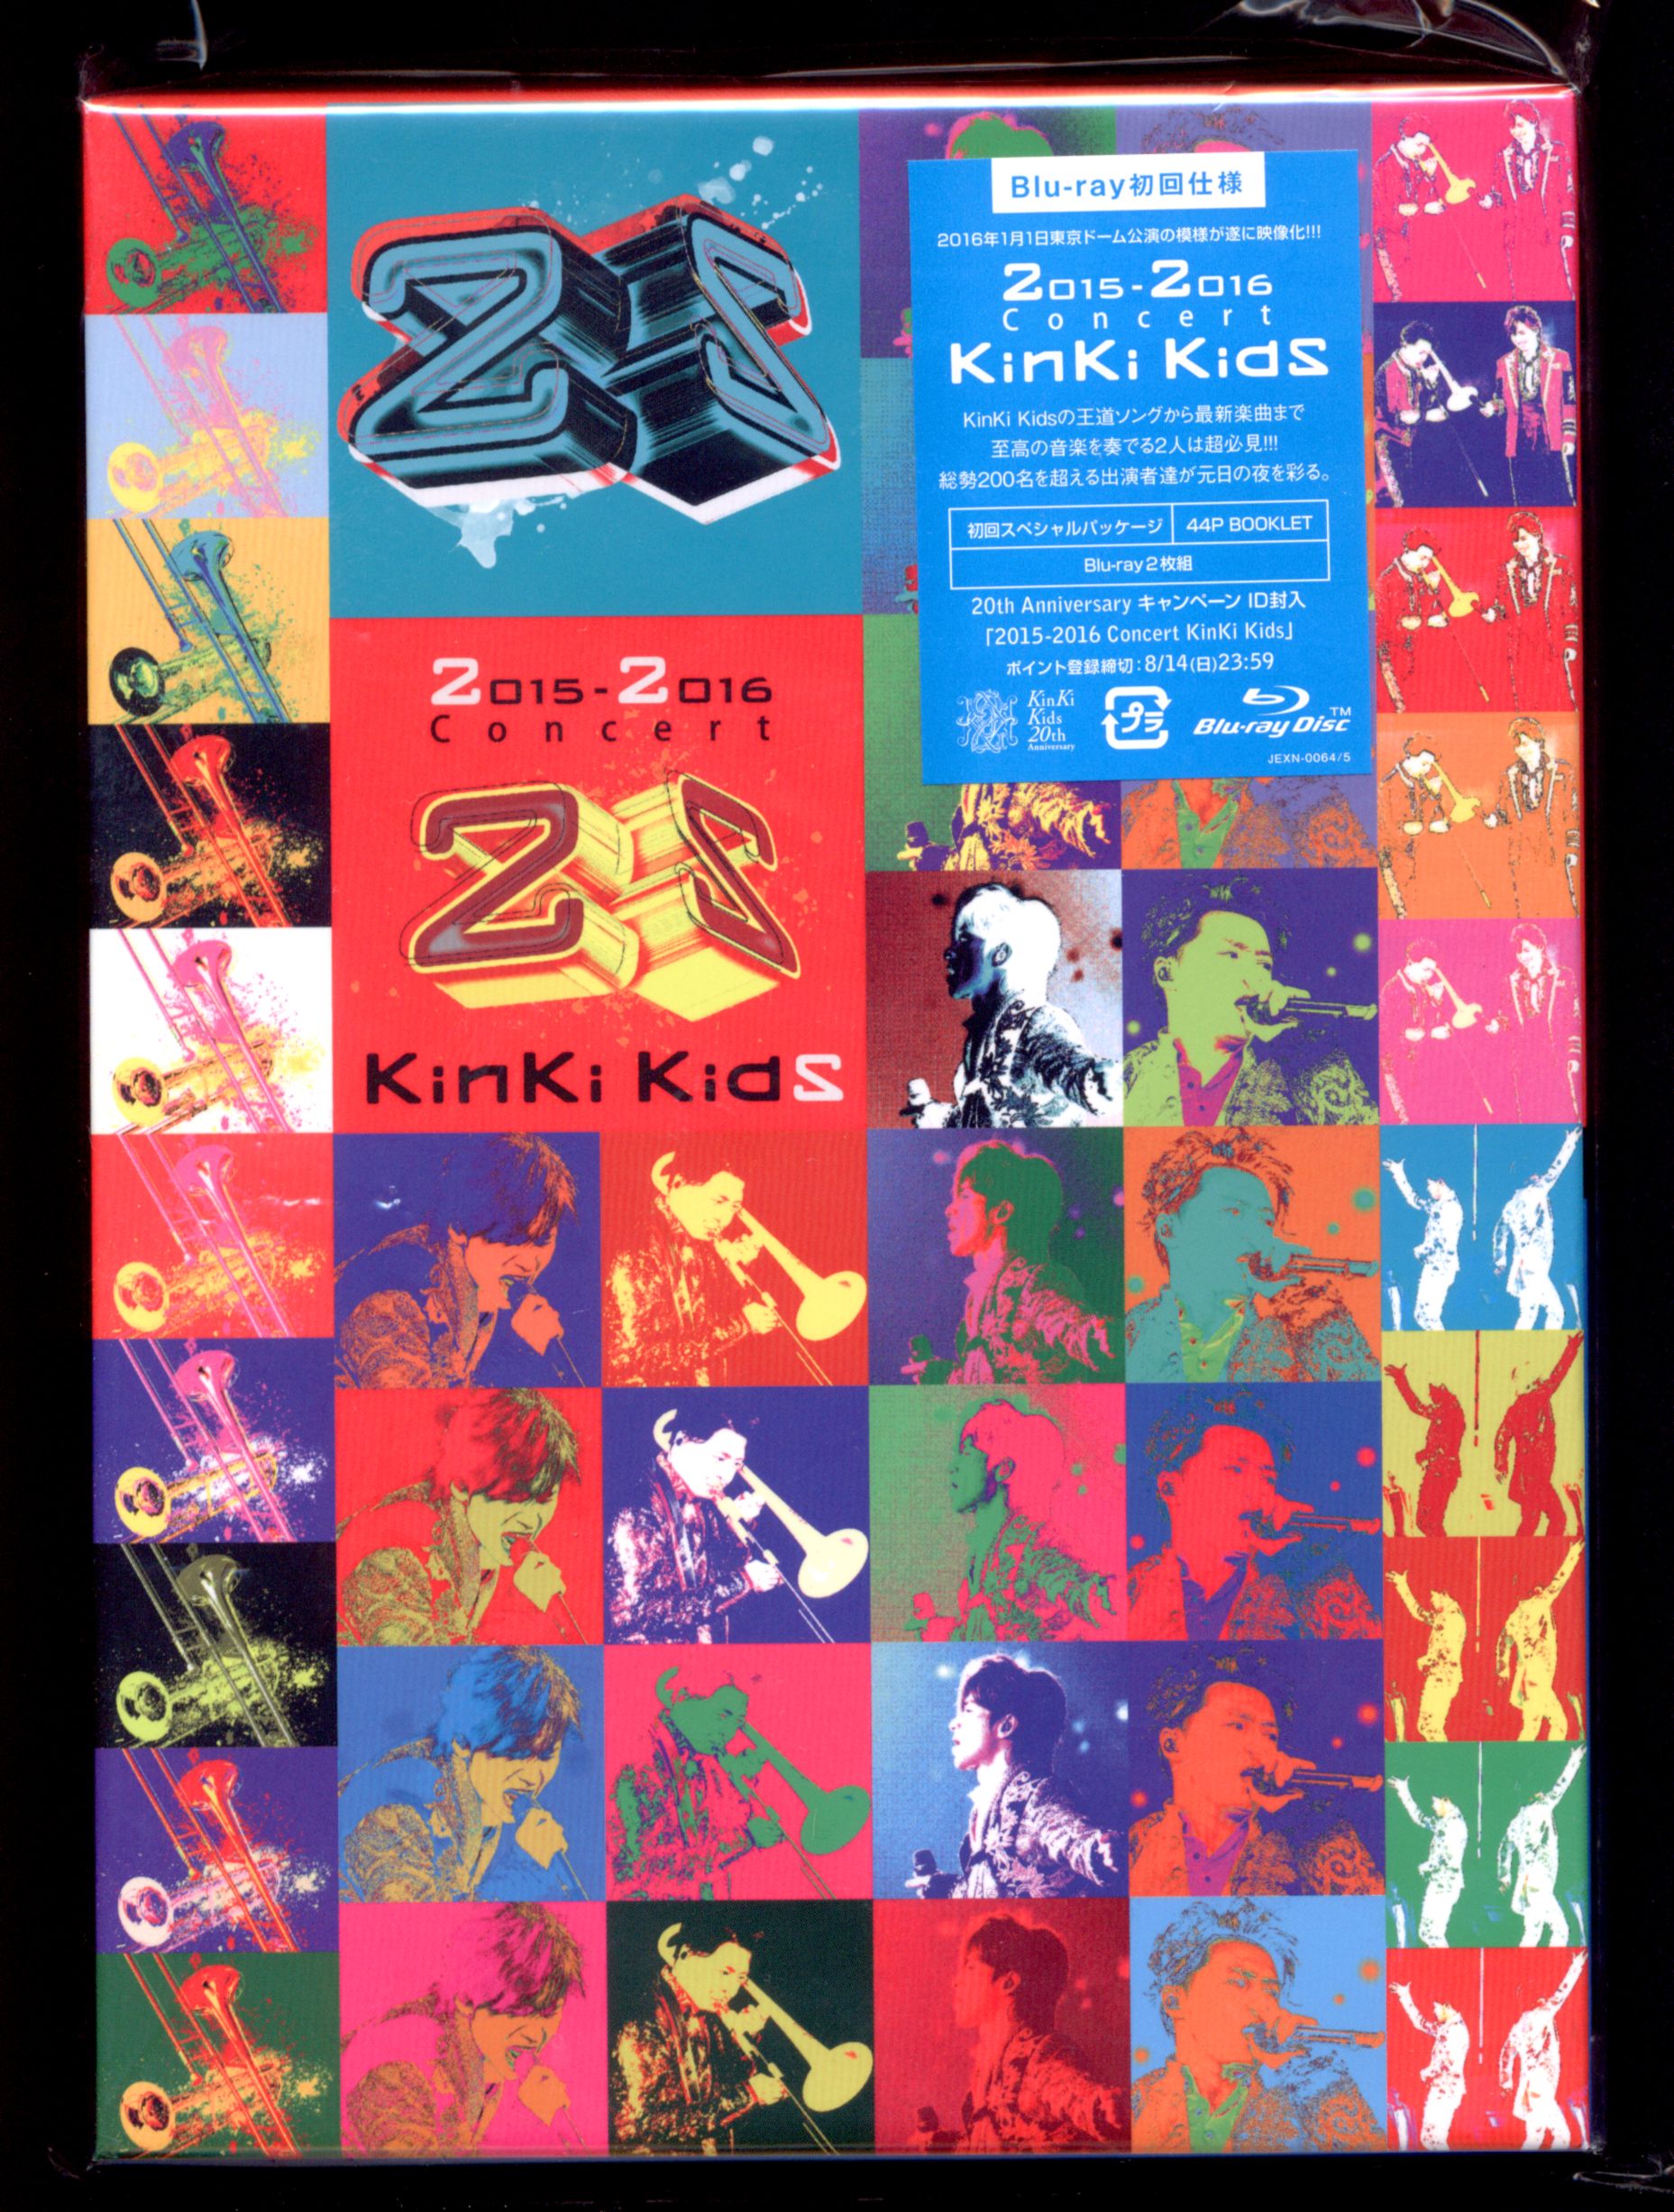 KinKi Kids 2015-2016 Concert Blu-ray First Edition Limited Ed Disc